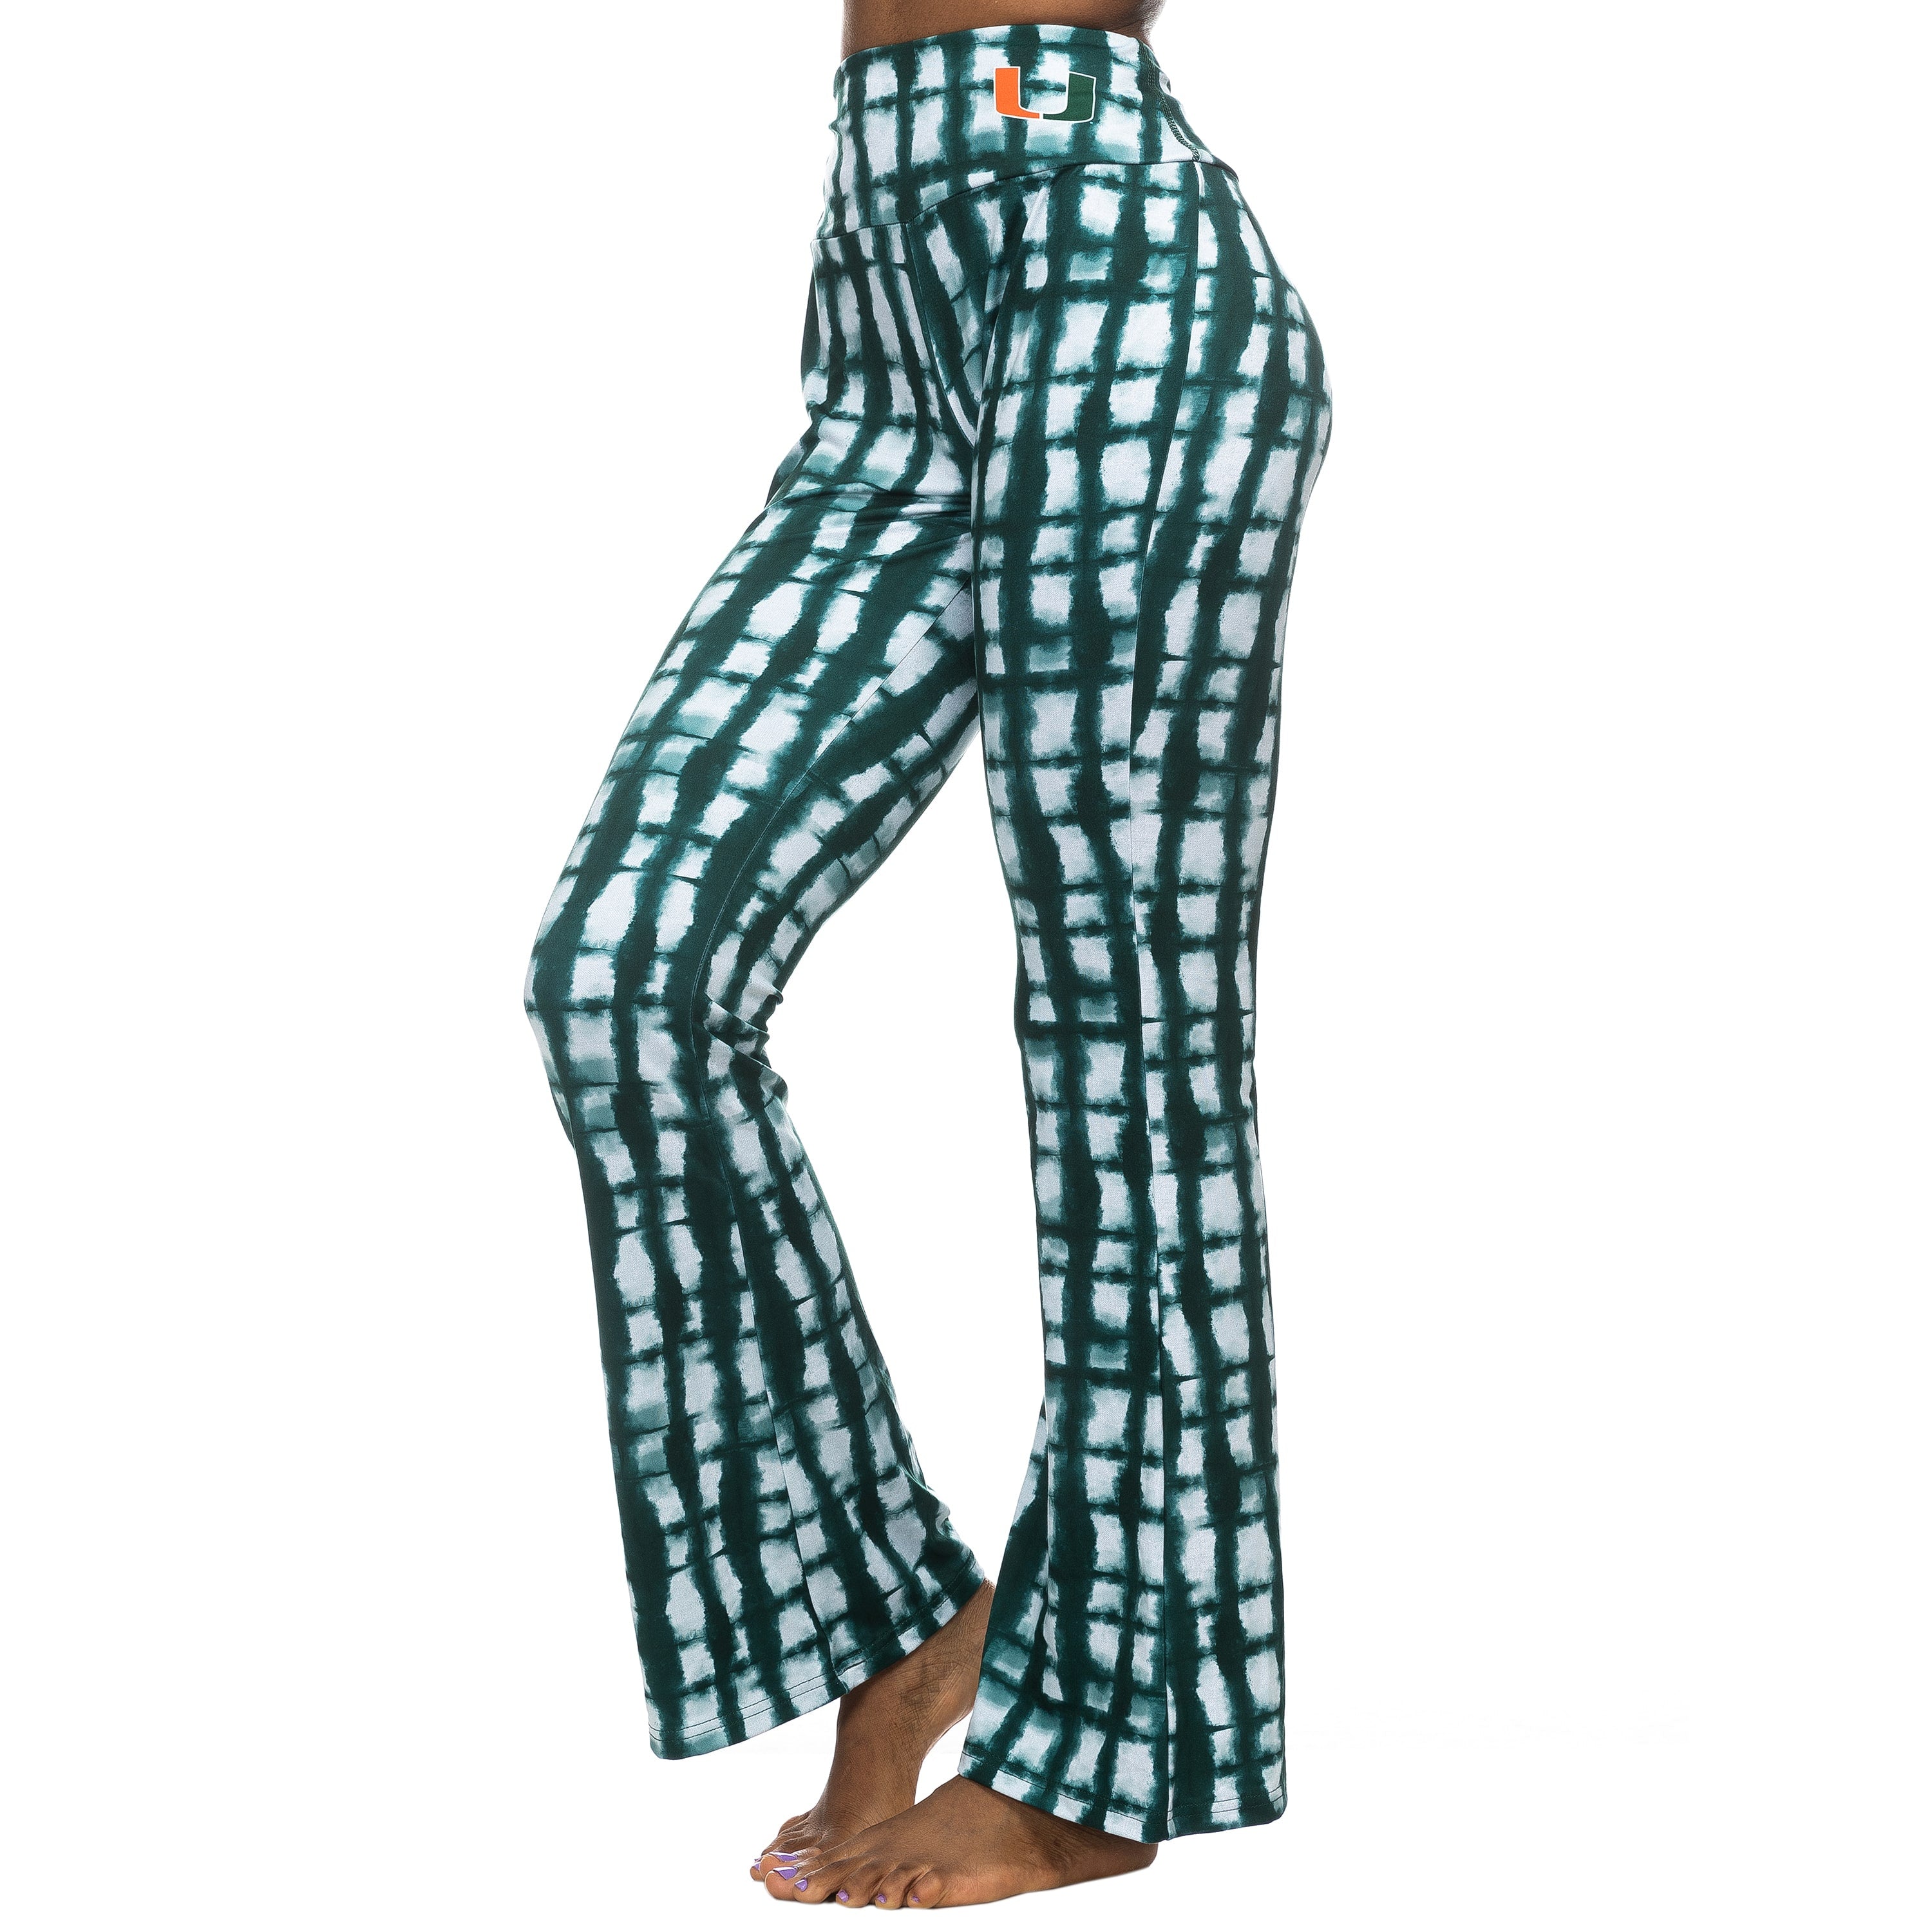 Musuos Women Boho Flare Pants High Waist Stretch Bell Bottom Yoga Pants  Hippie Leggings - Walmart.com